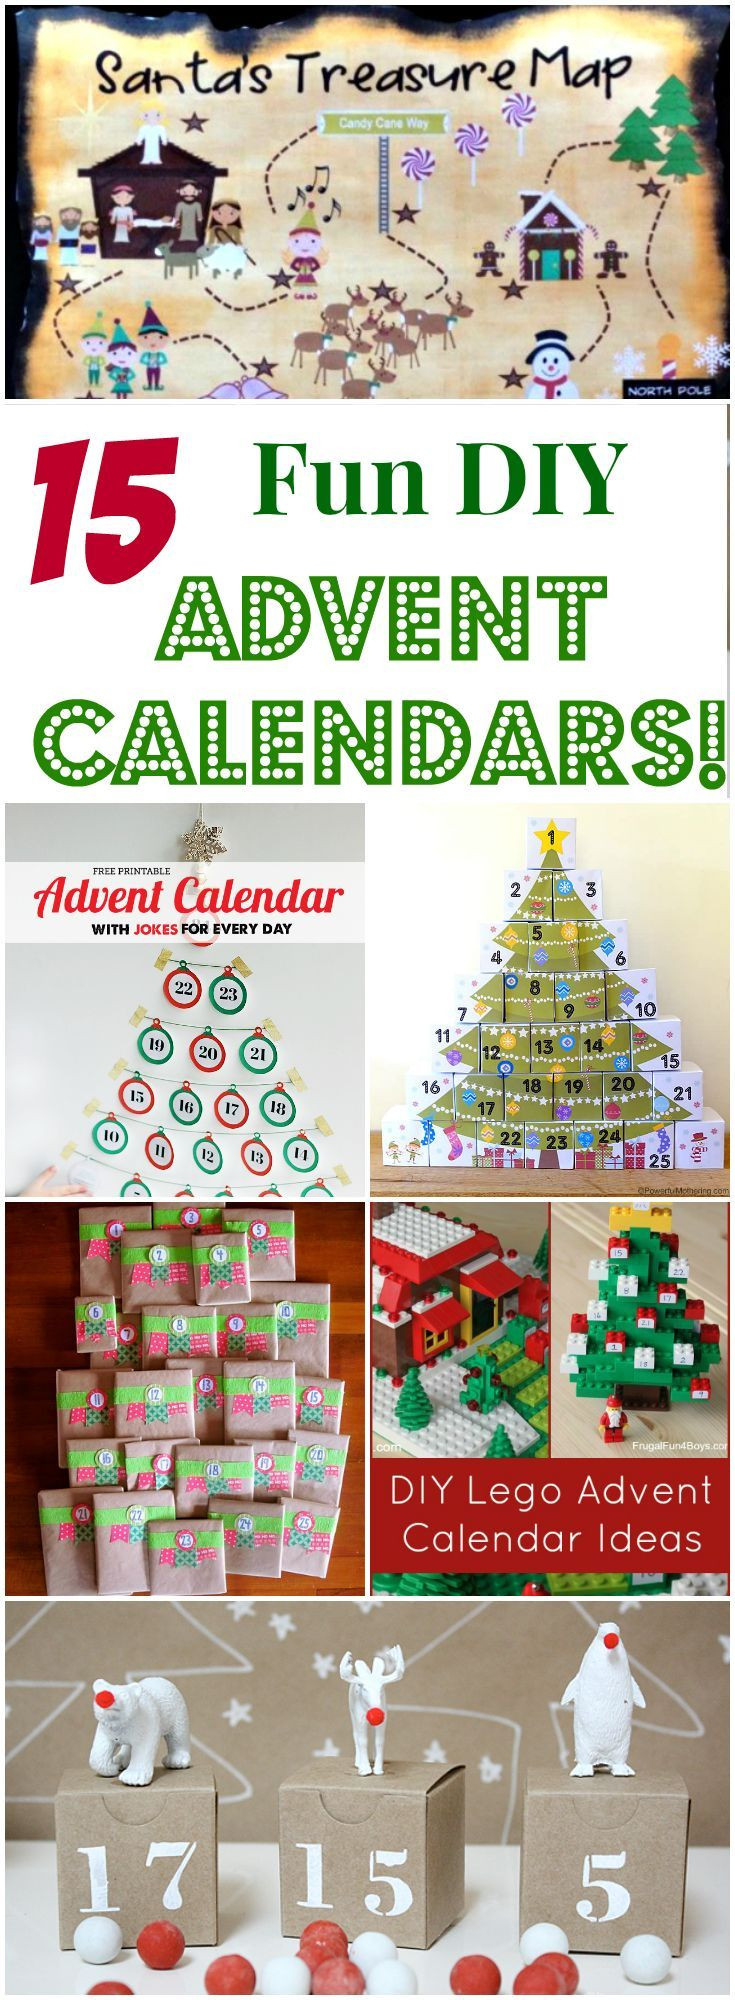 Best ideas about DIY Advent Calendar For Toddlers
. Save or Pin 15 Fun DIY Advent Calendars for Kids Now.